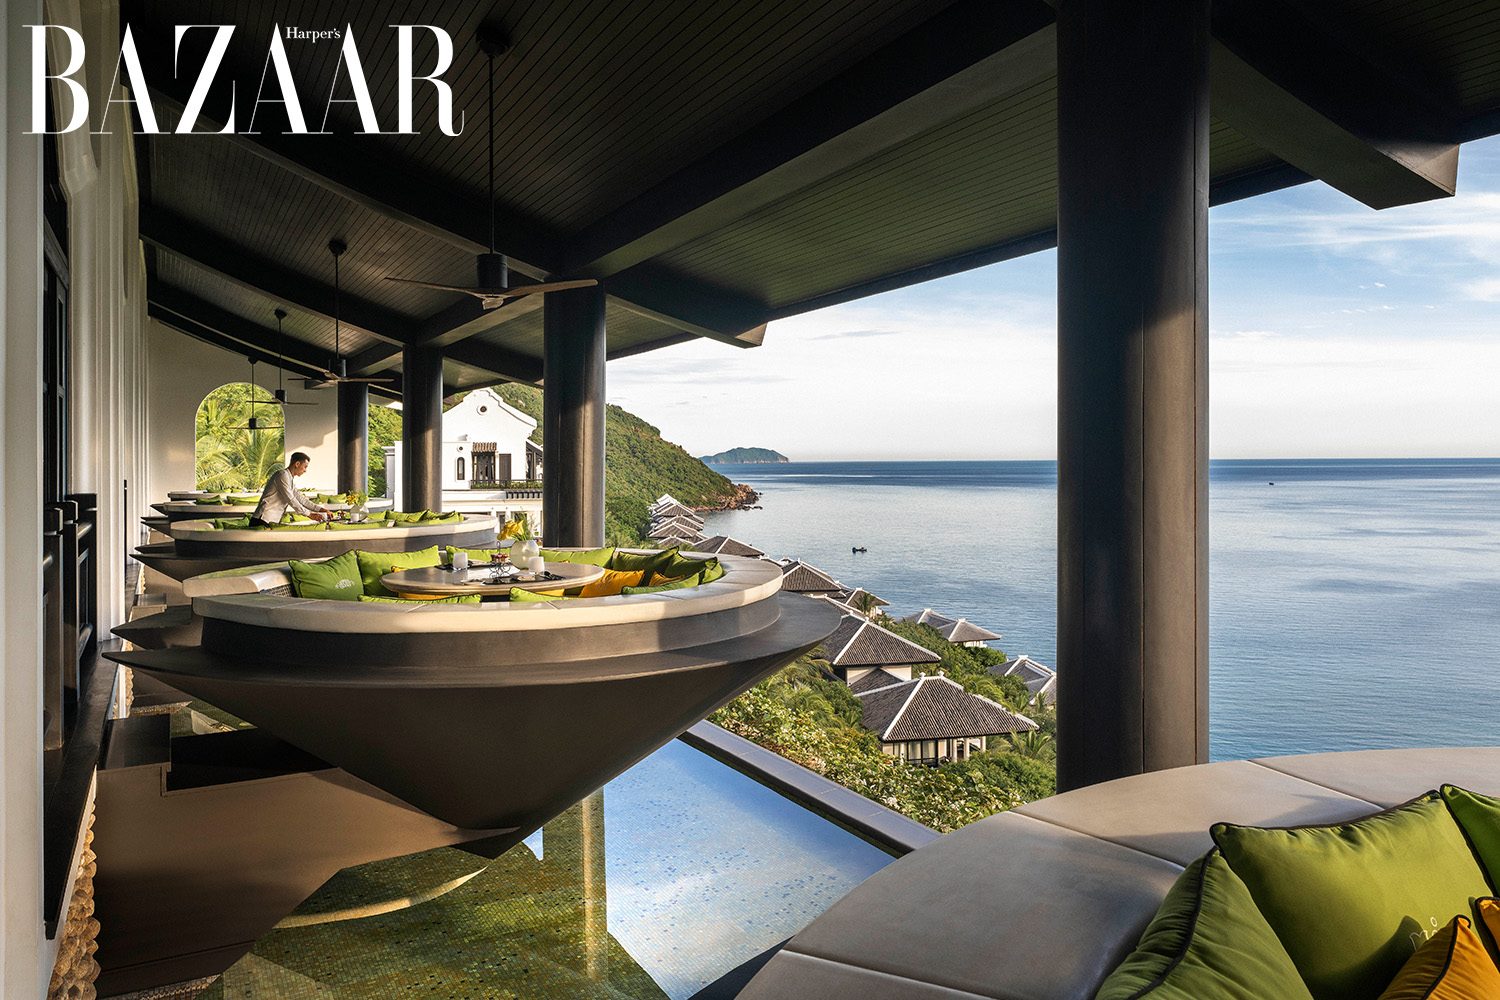 Harper's Bazaar_Khu nghỉ dưỡng InterContinental Danang Sun Peninsula_04